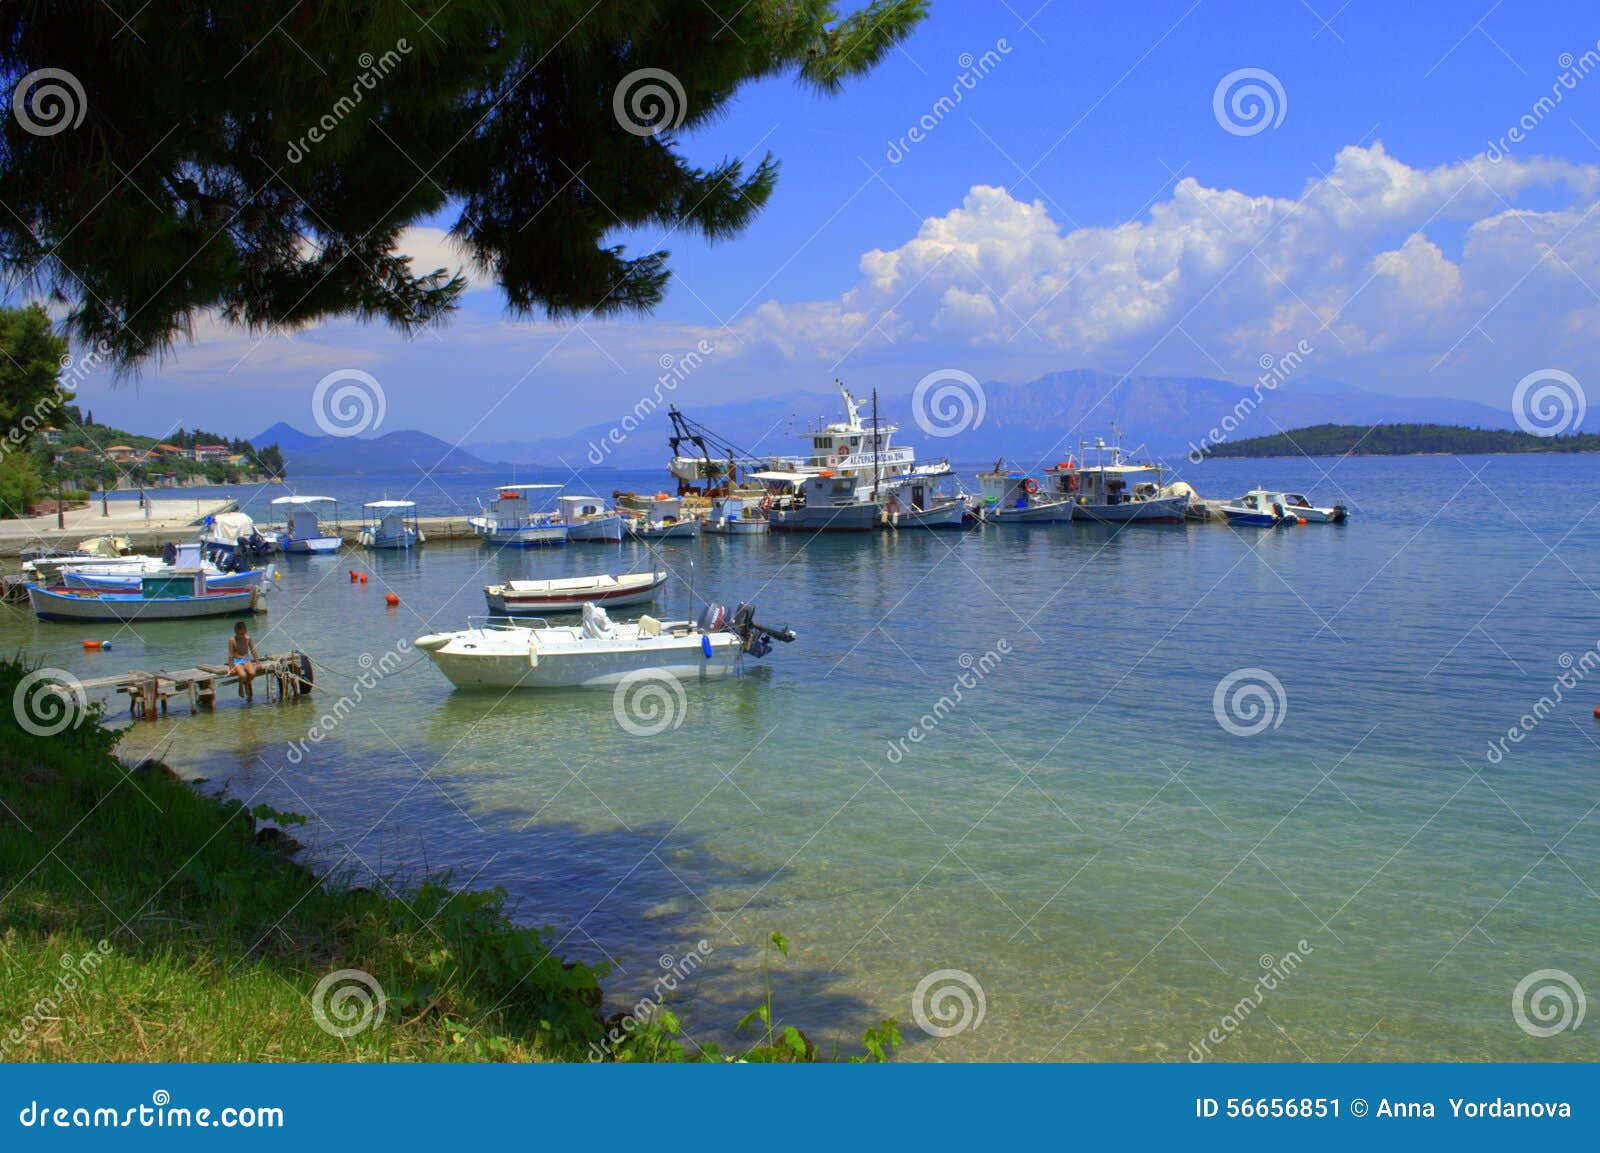 Beautiful Ionian Sea Bay,Greece Editorial Photo - Image of motorboats ...